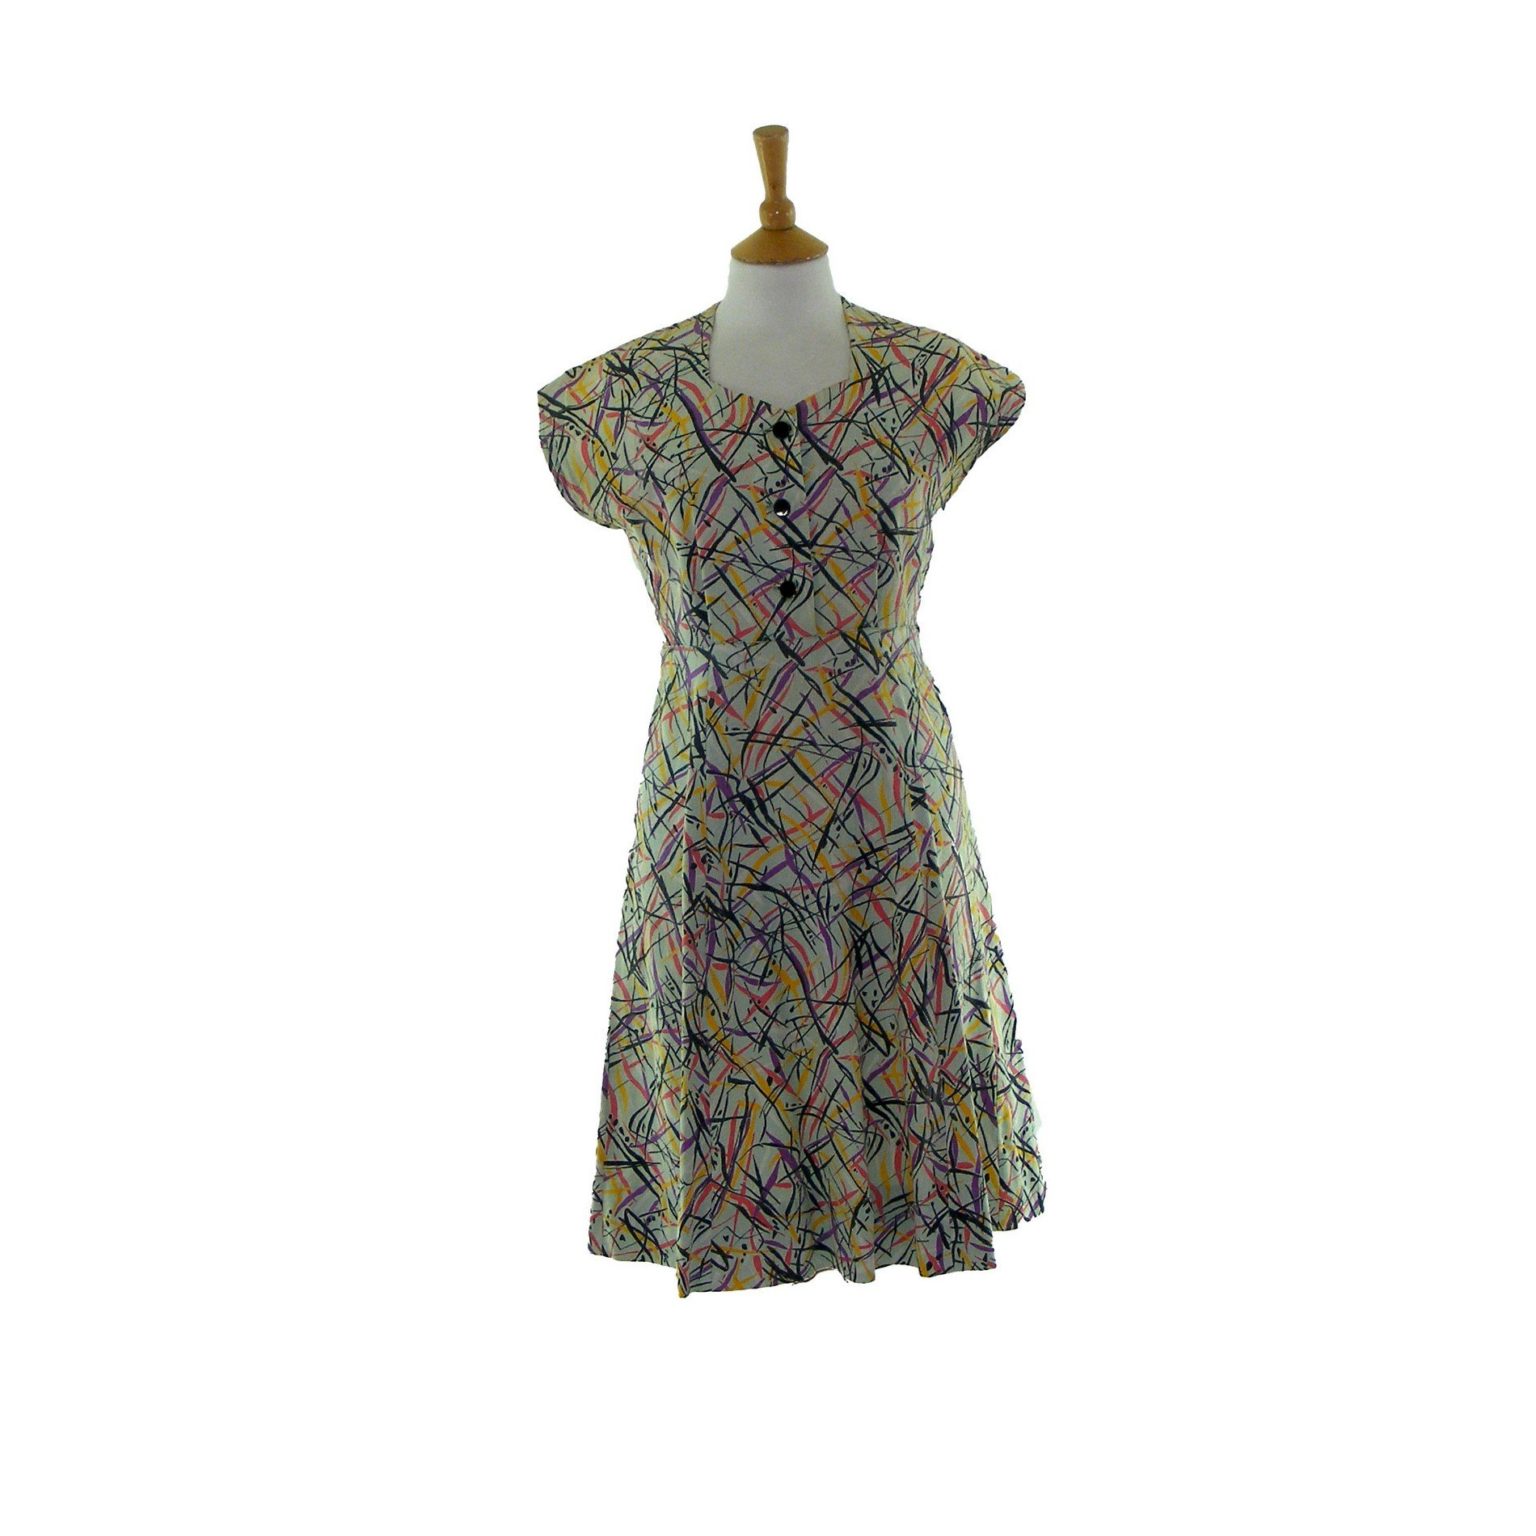 1950s dresses | 50s dresses, 50s style dresses uk | Blue17